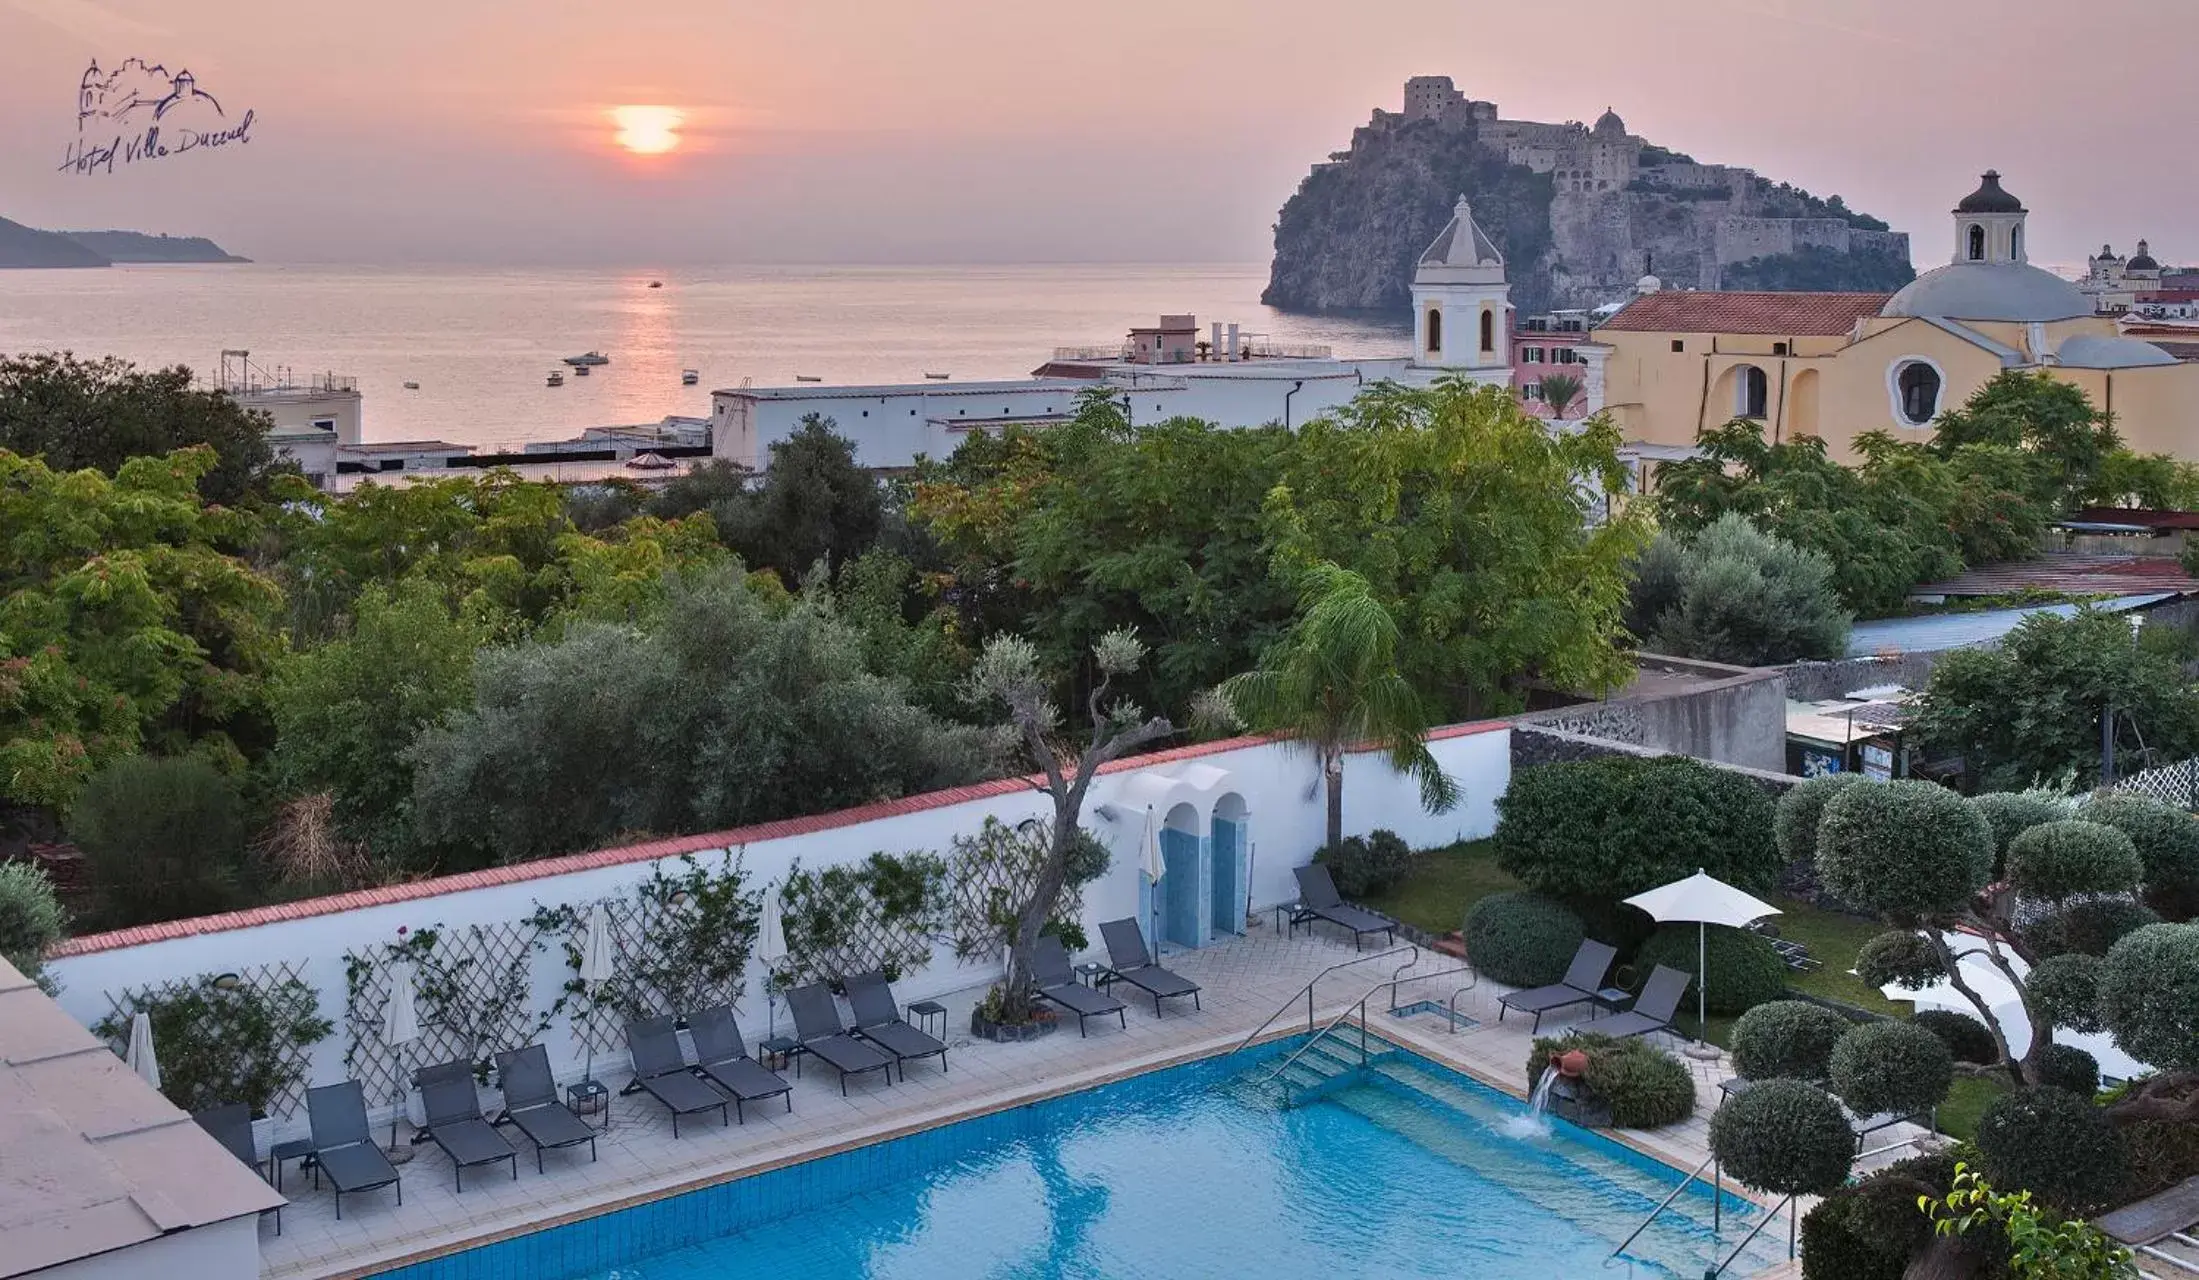 Sunset, Pool View in Hotel Villa Durrueli Resort & Spa